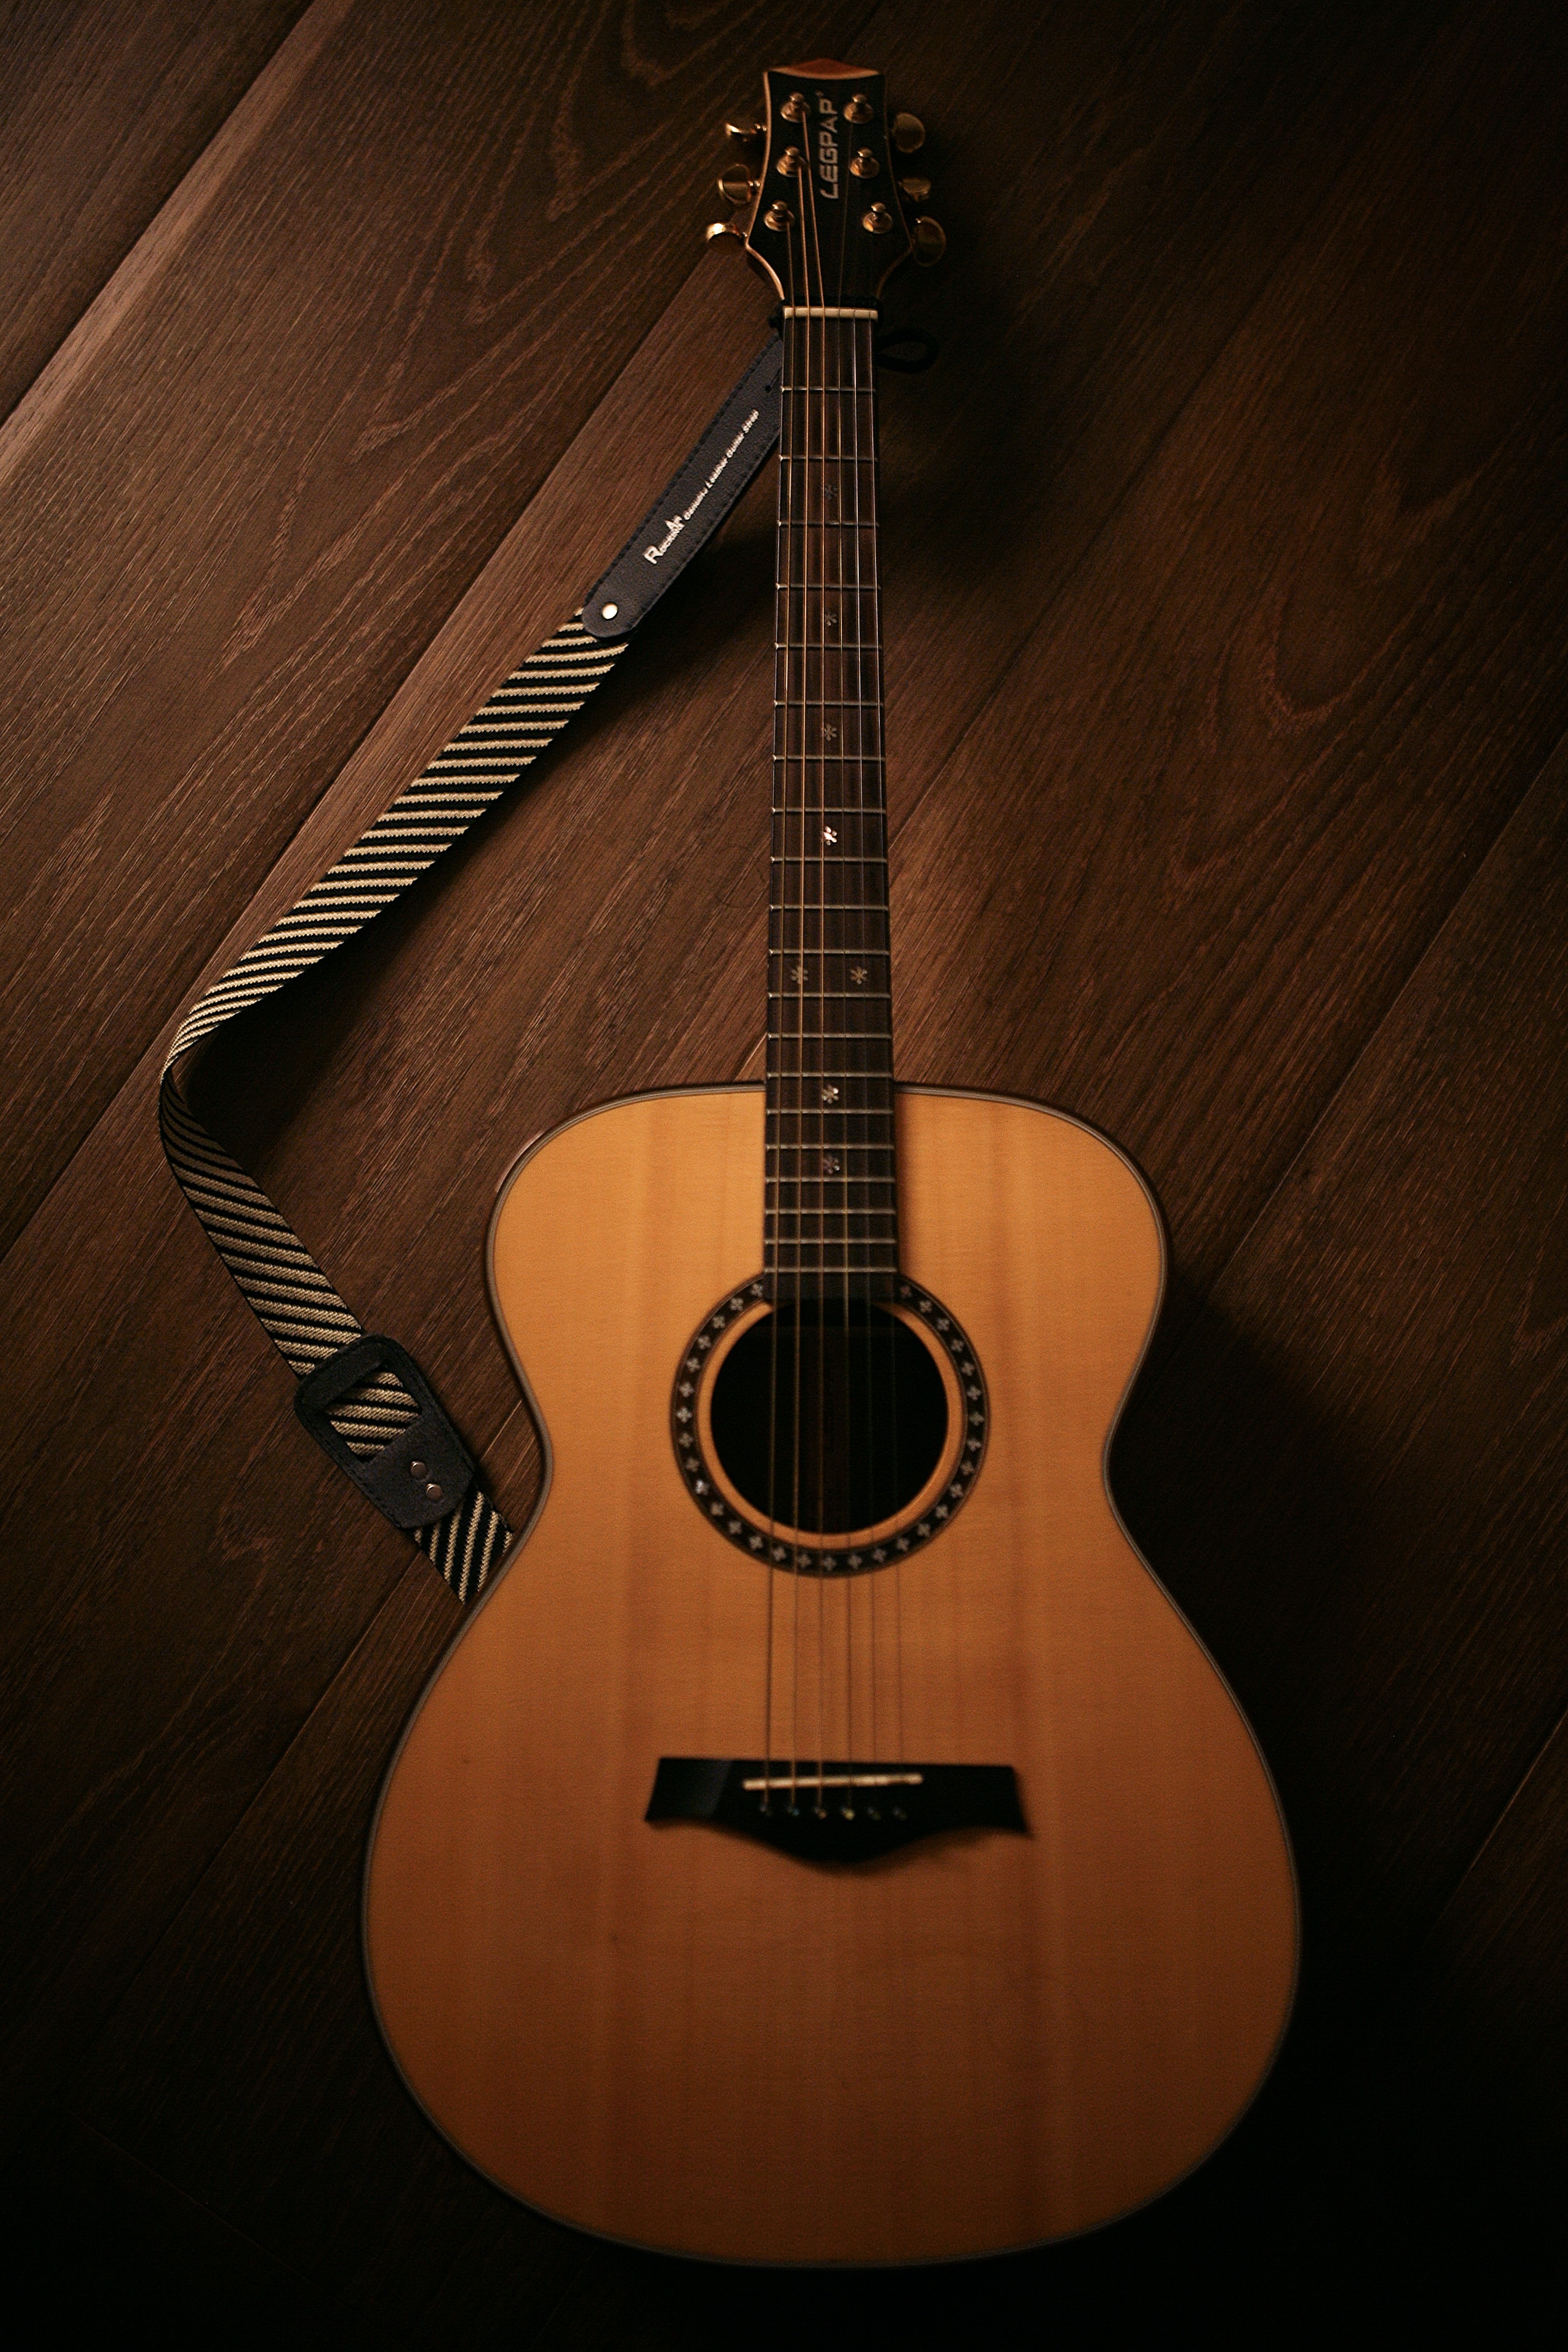 guitar, acoustic guitar, music, brown, musical instrument